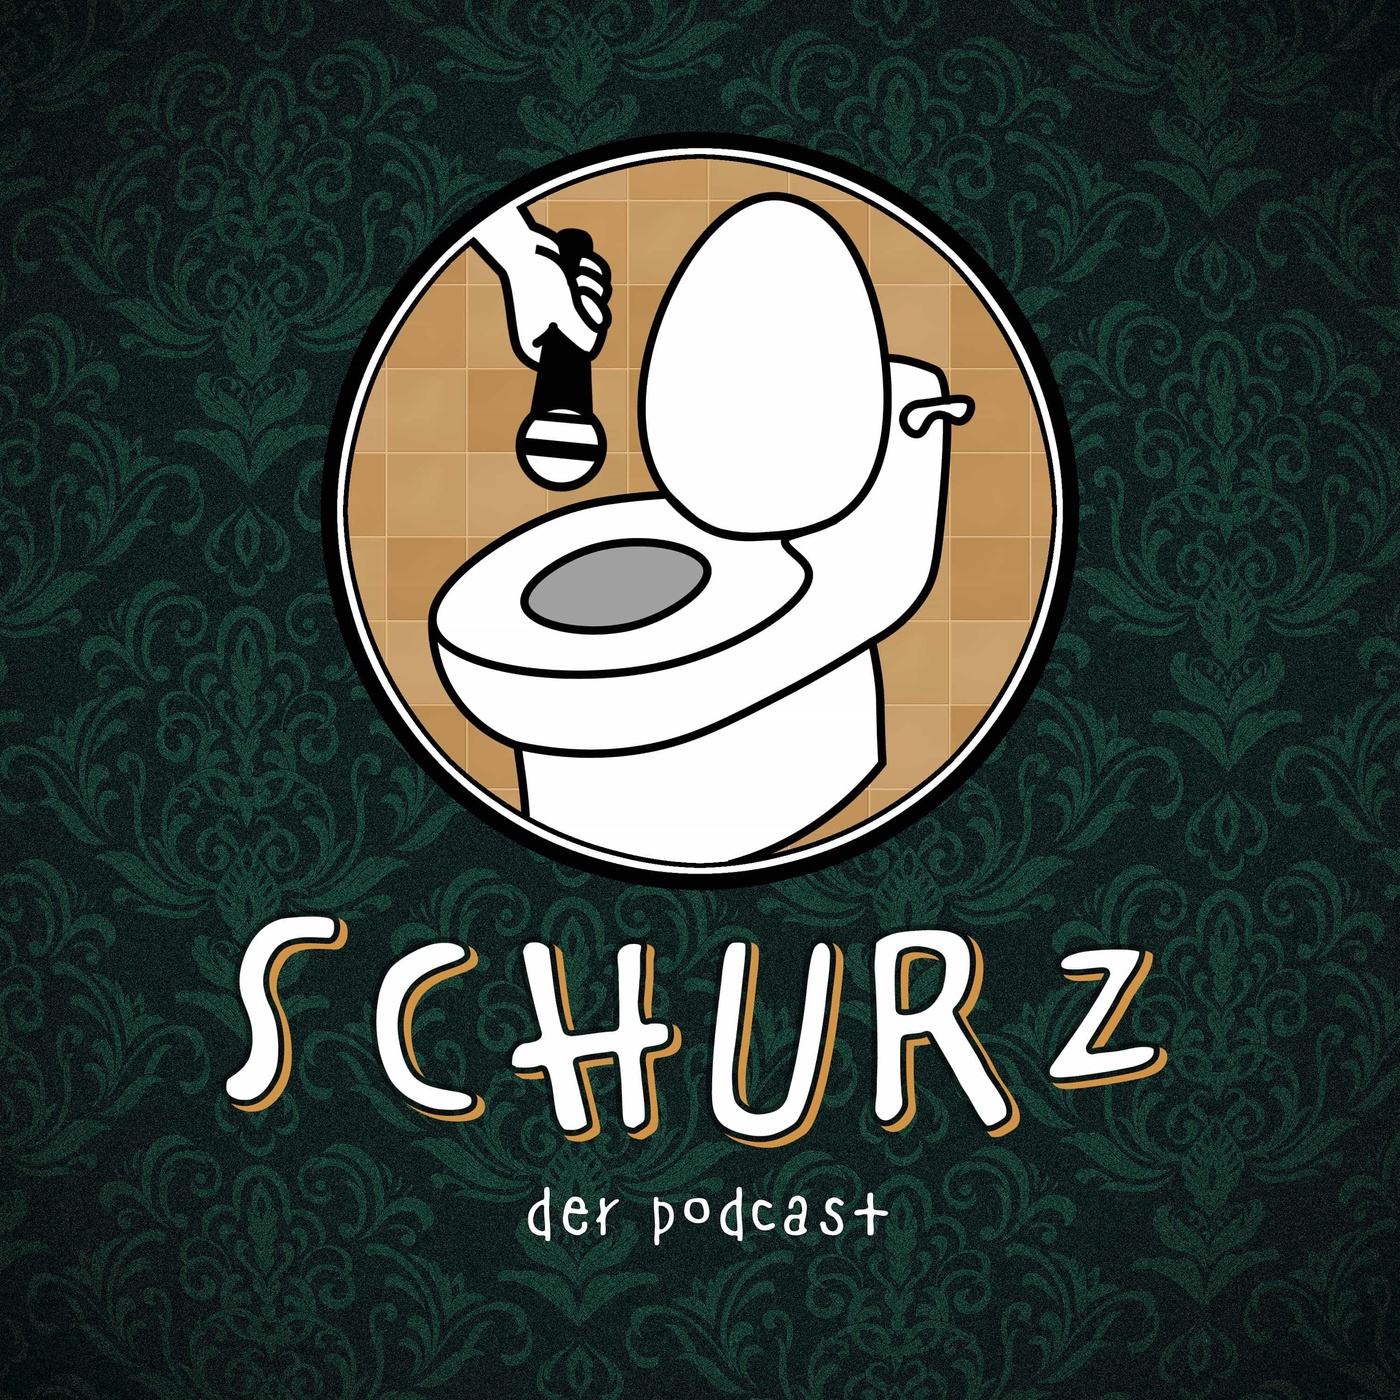 Schurz